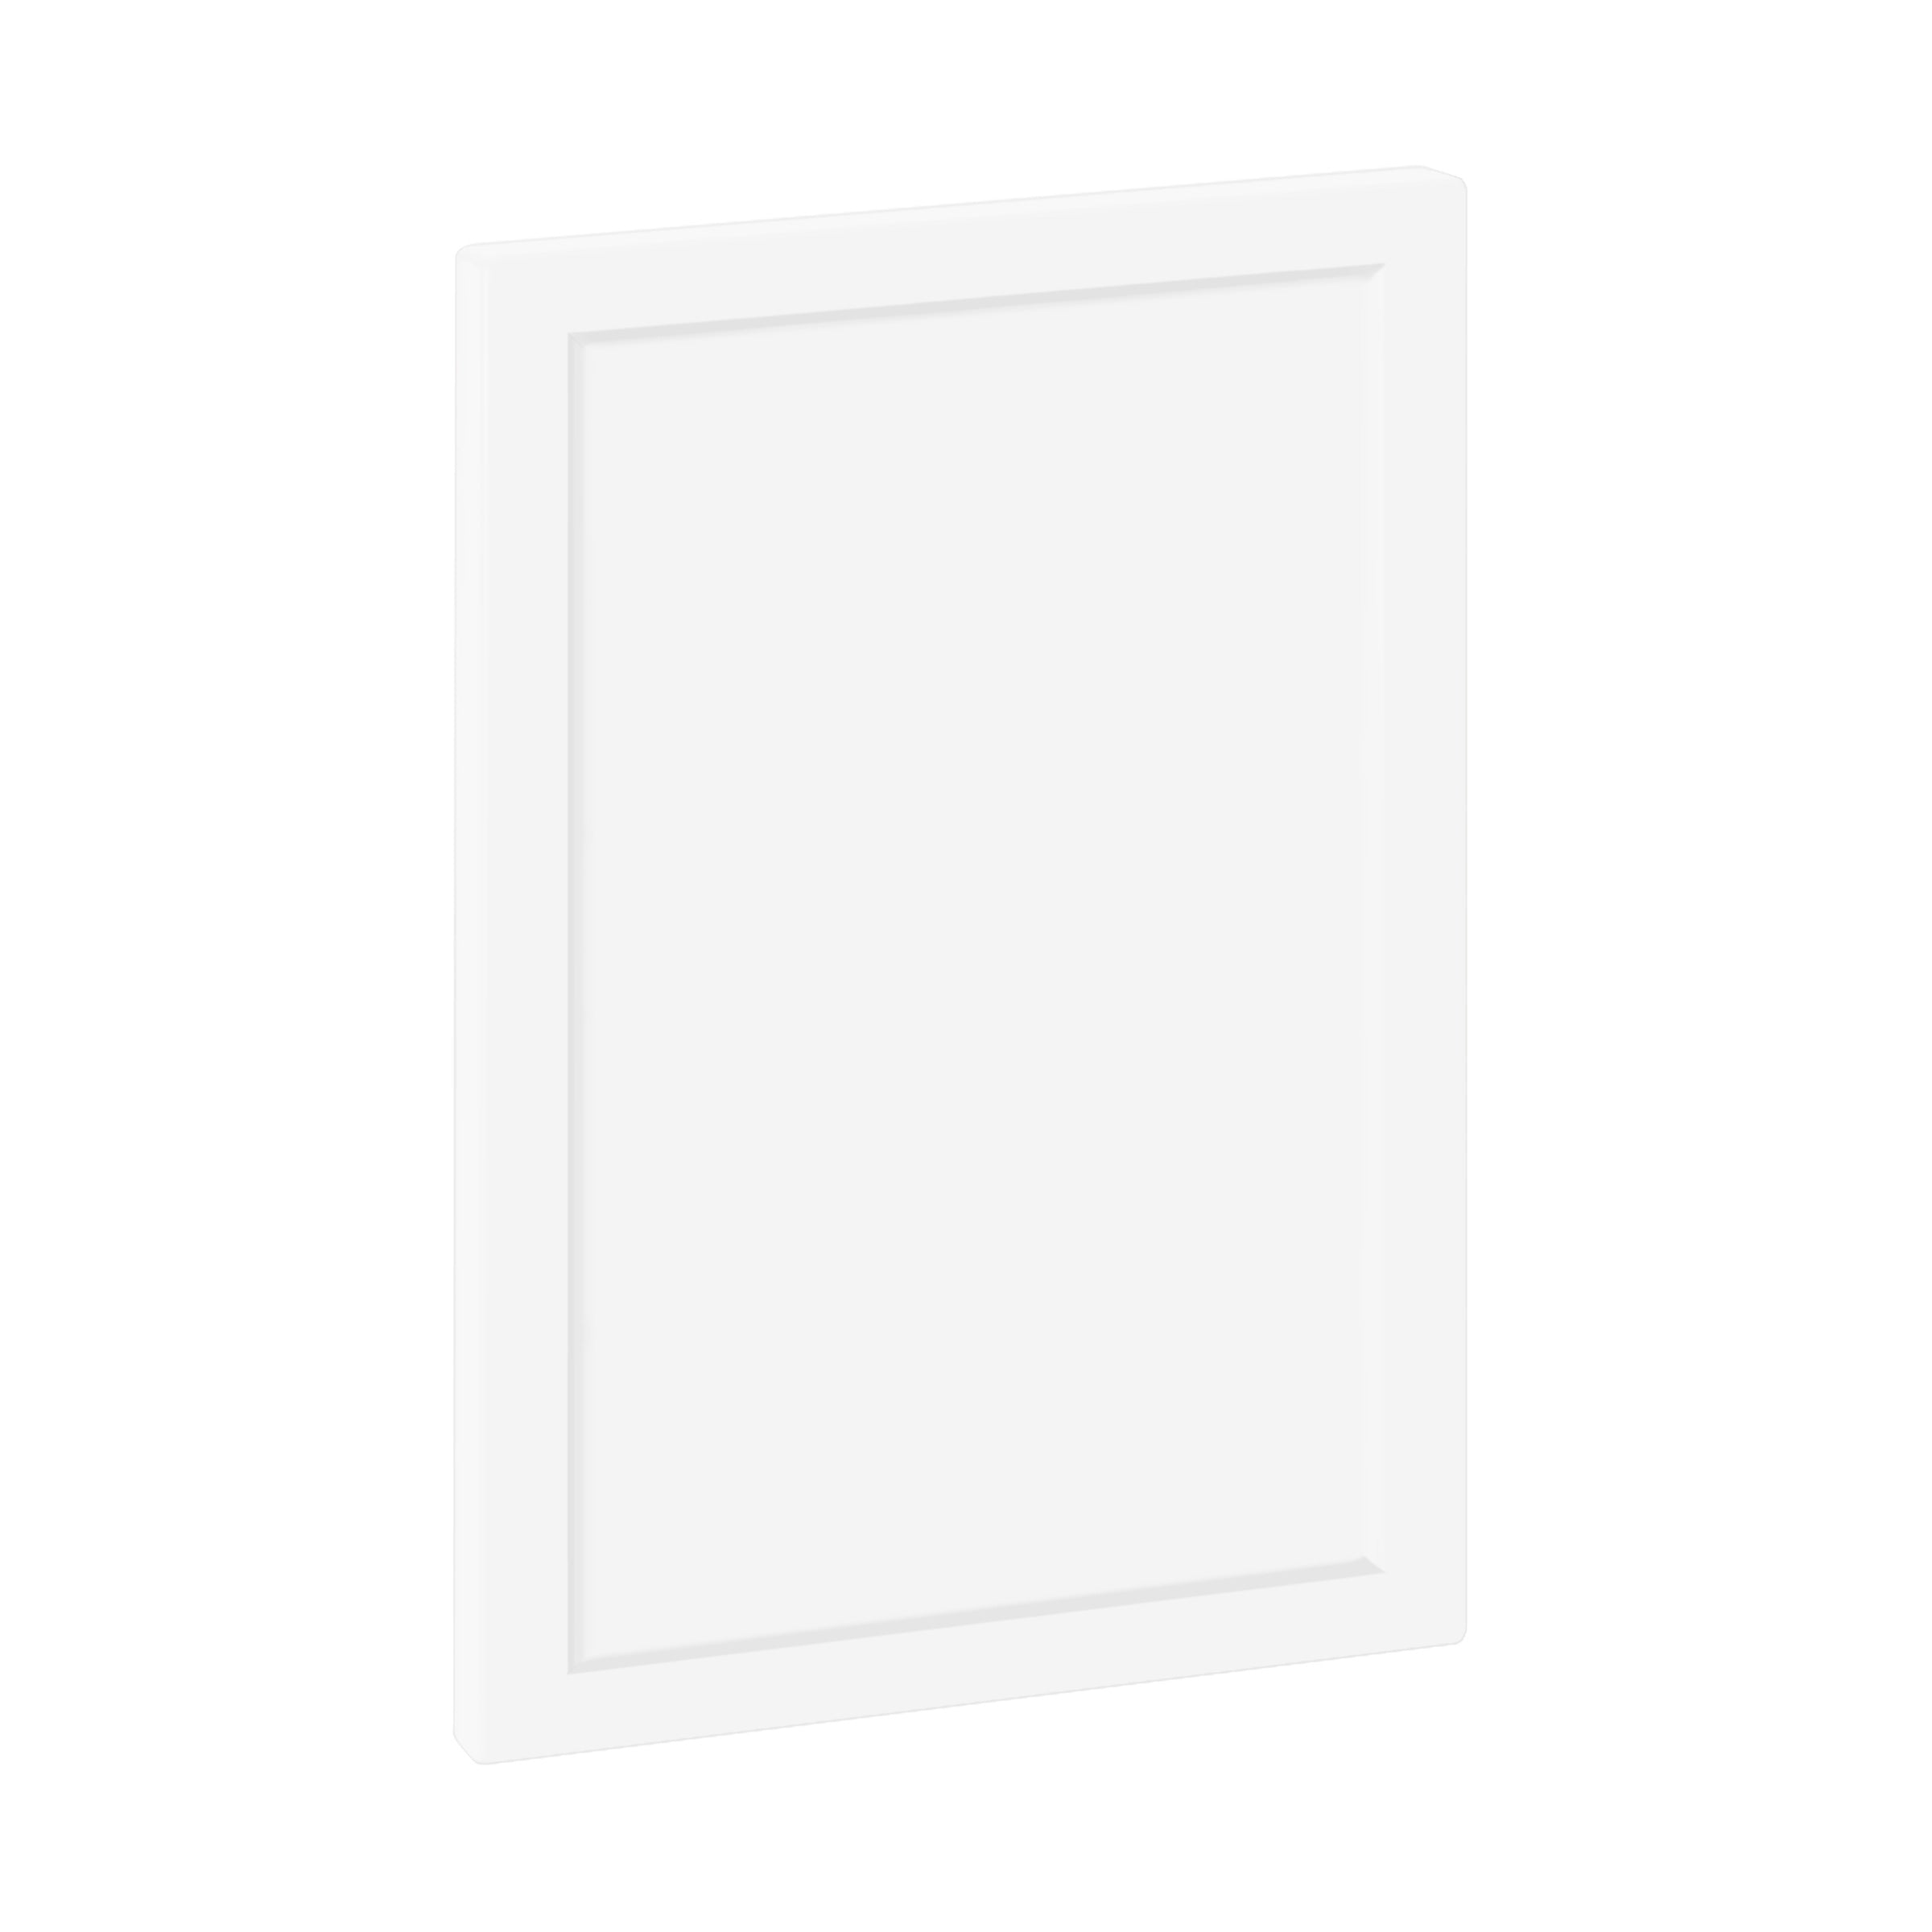 8" x 12" Cabinet Door Sample SSS Quarterline / White